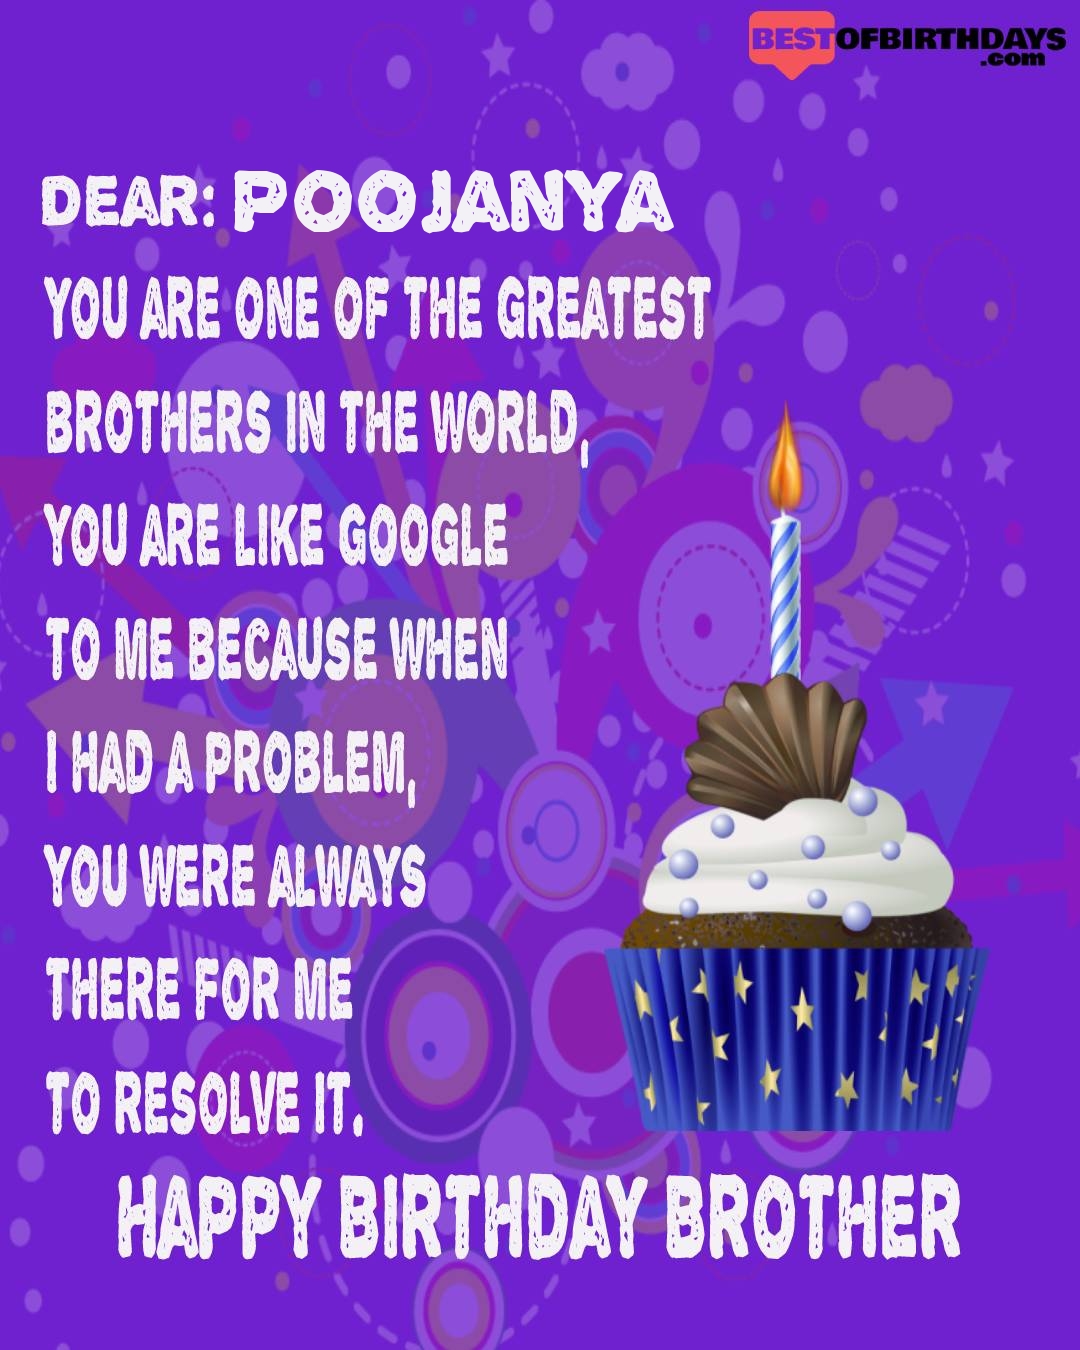 Happy birthday poojanya bhai brother bro